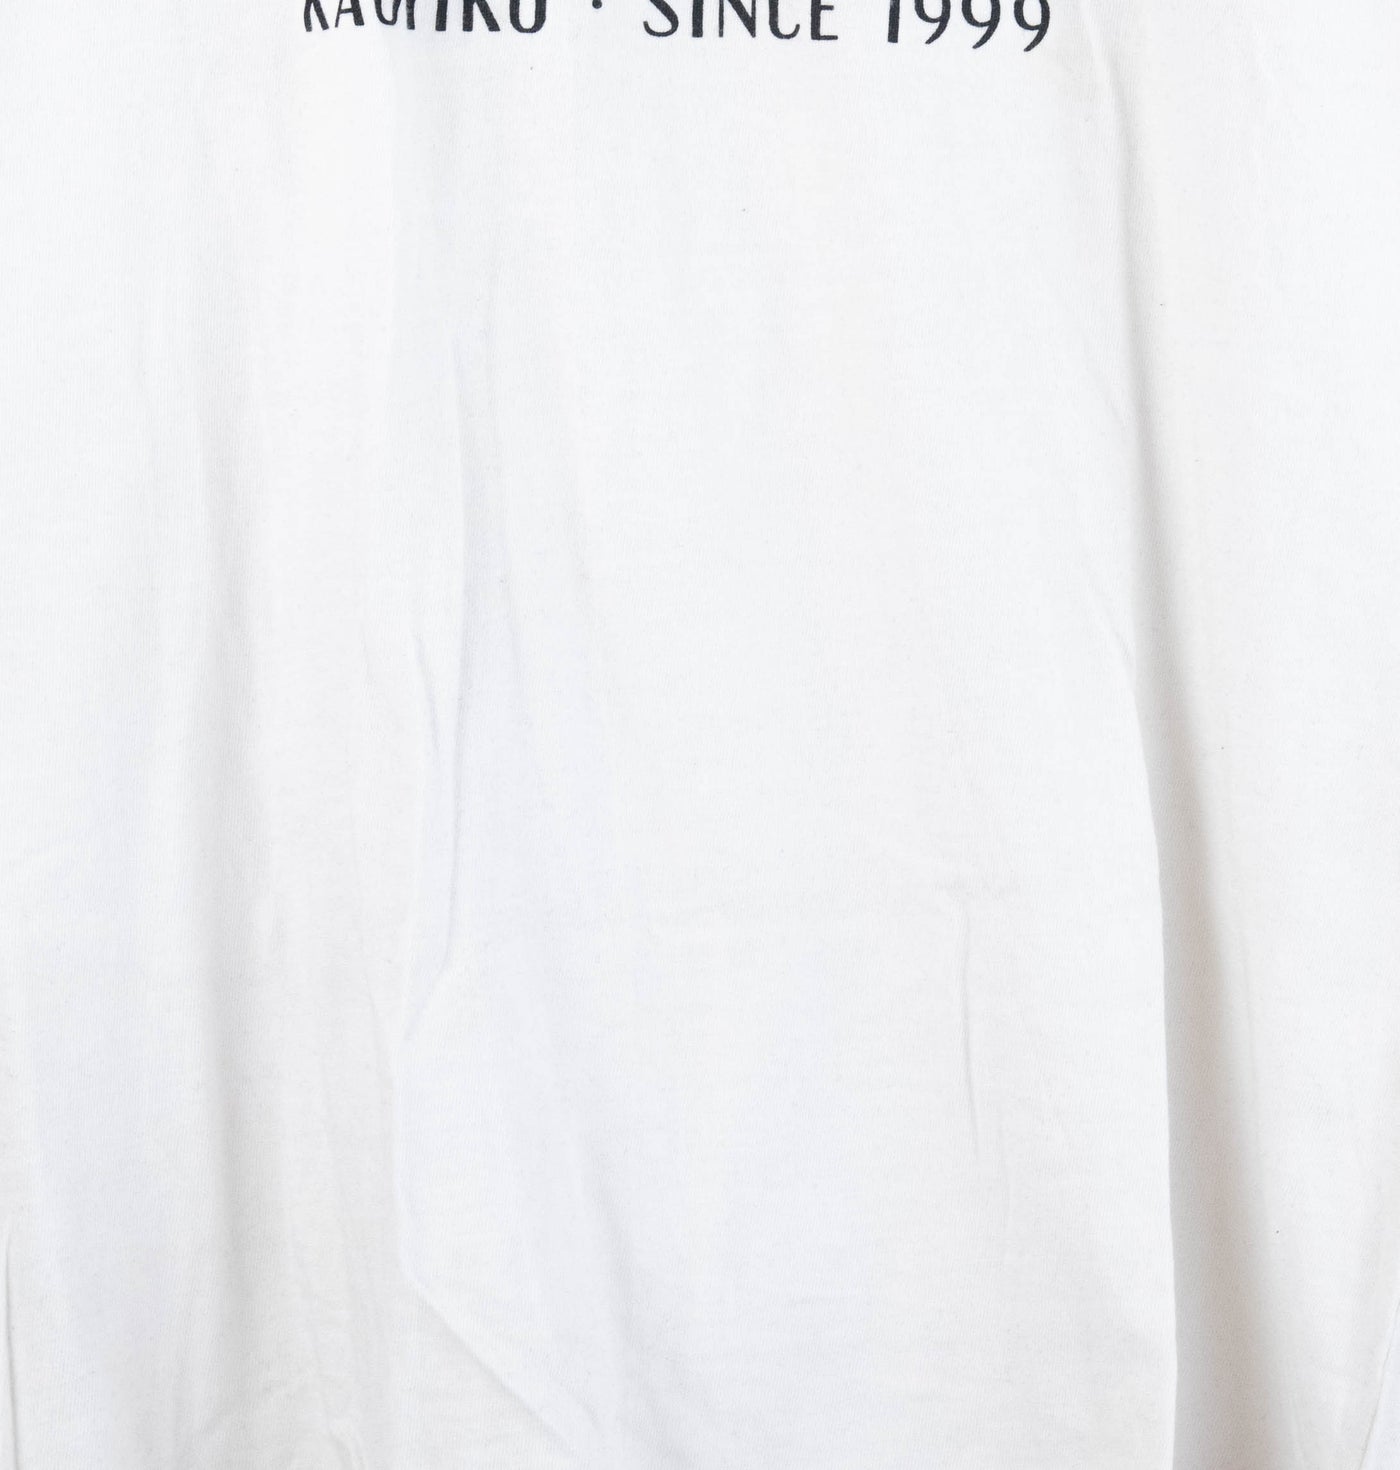 Camiseta blanca oversize